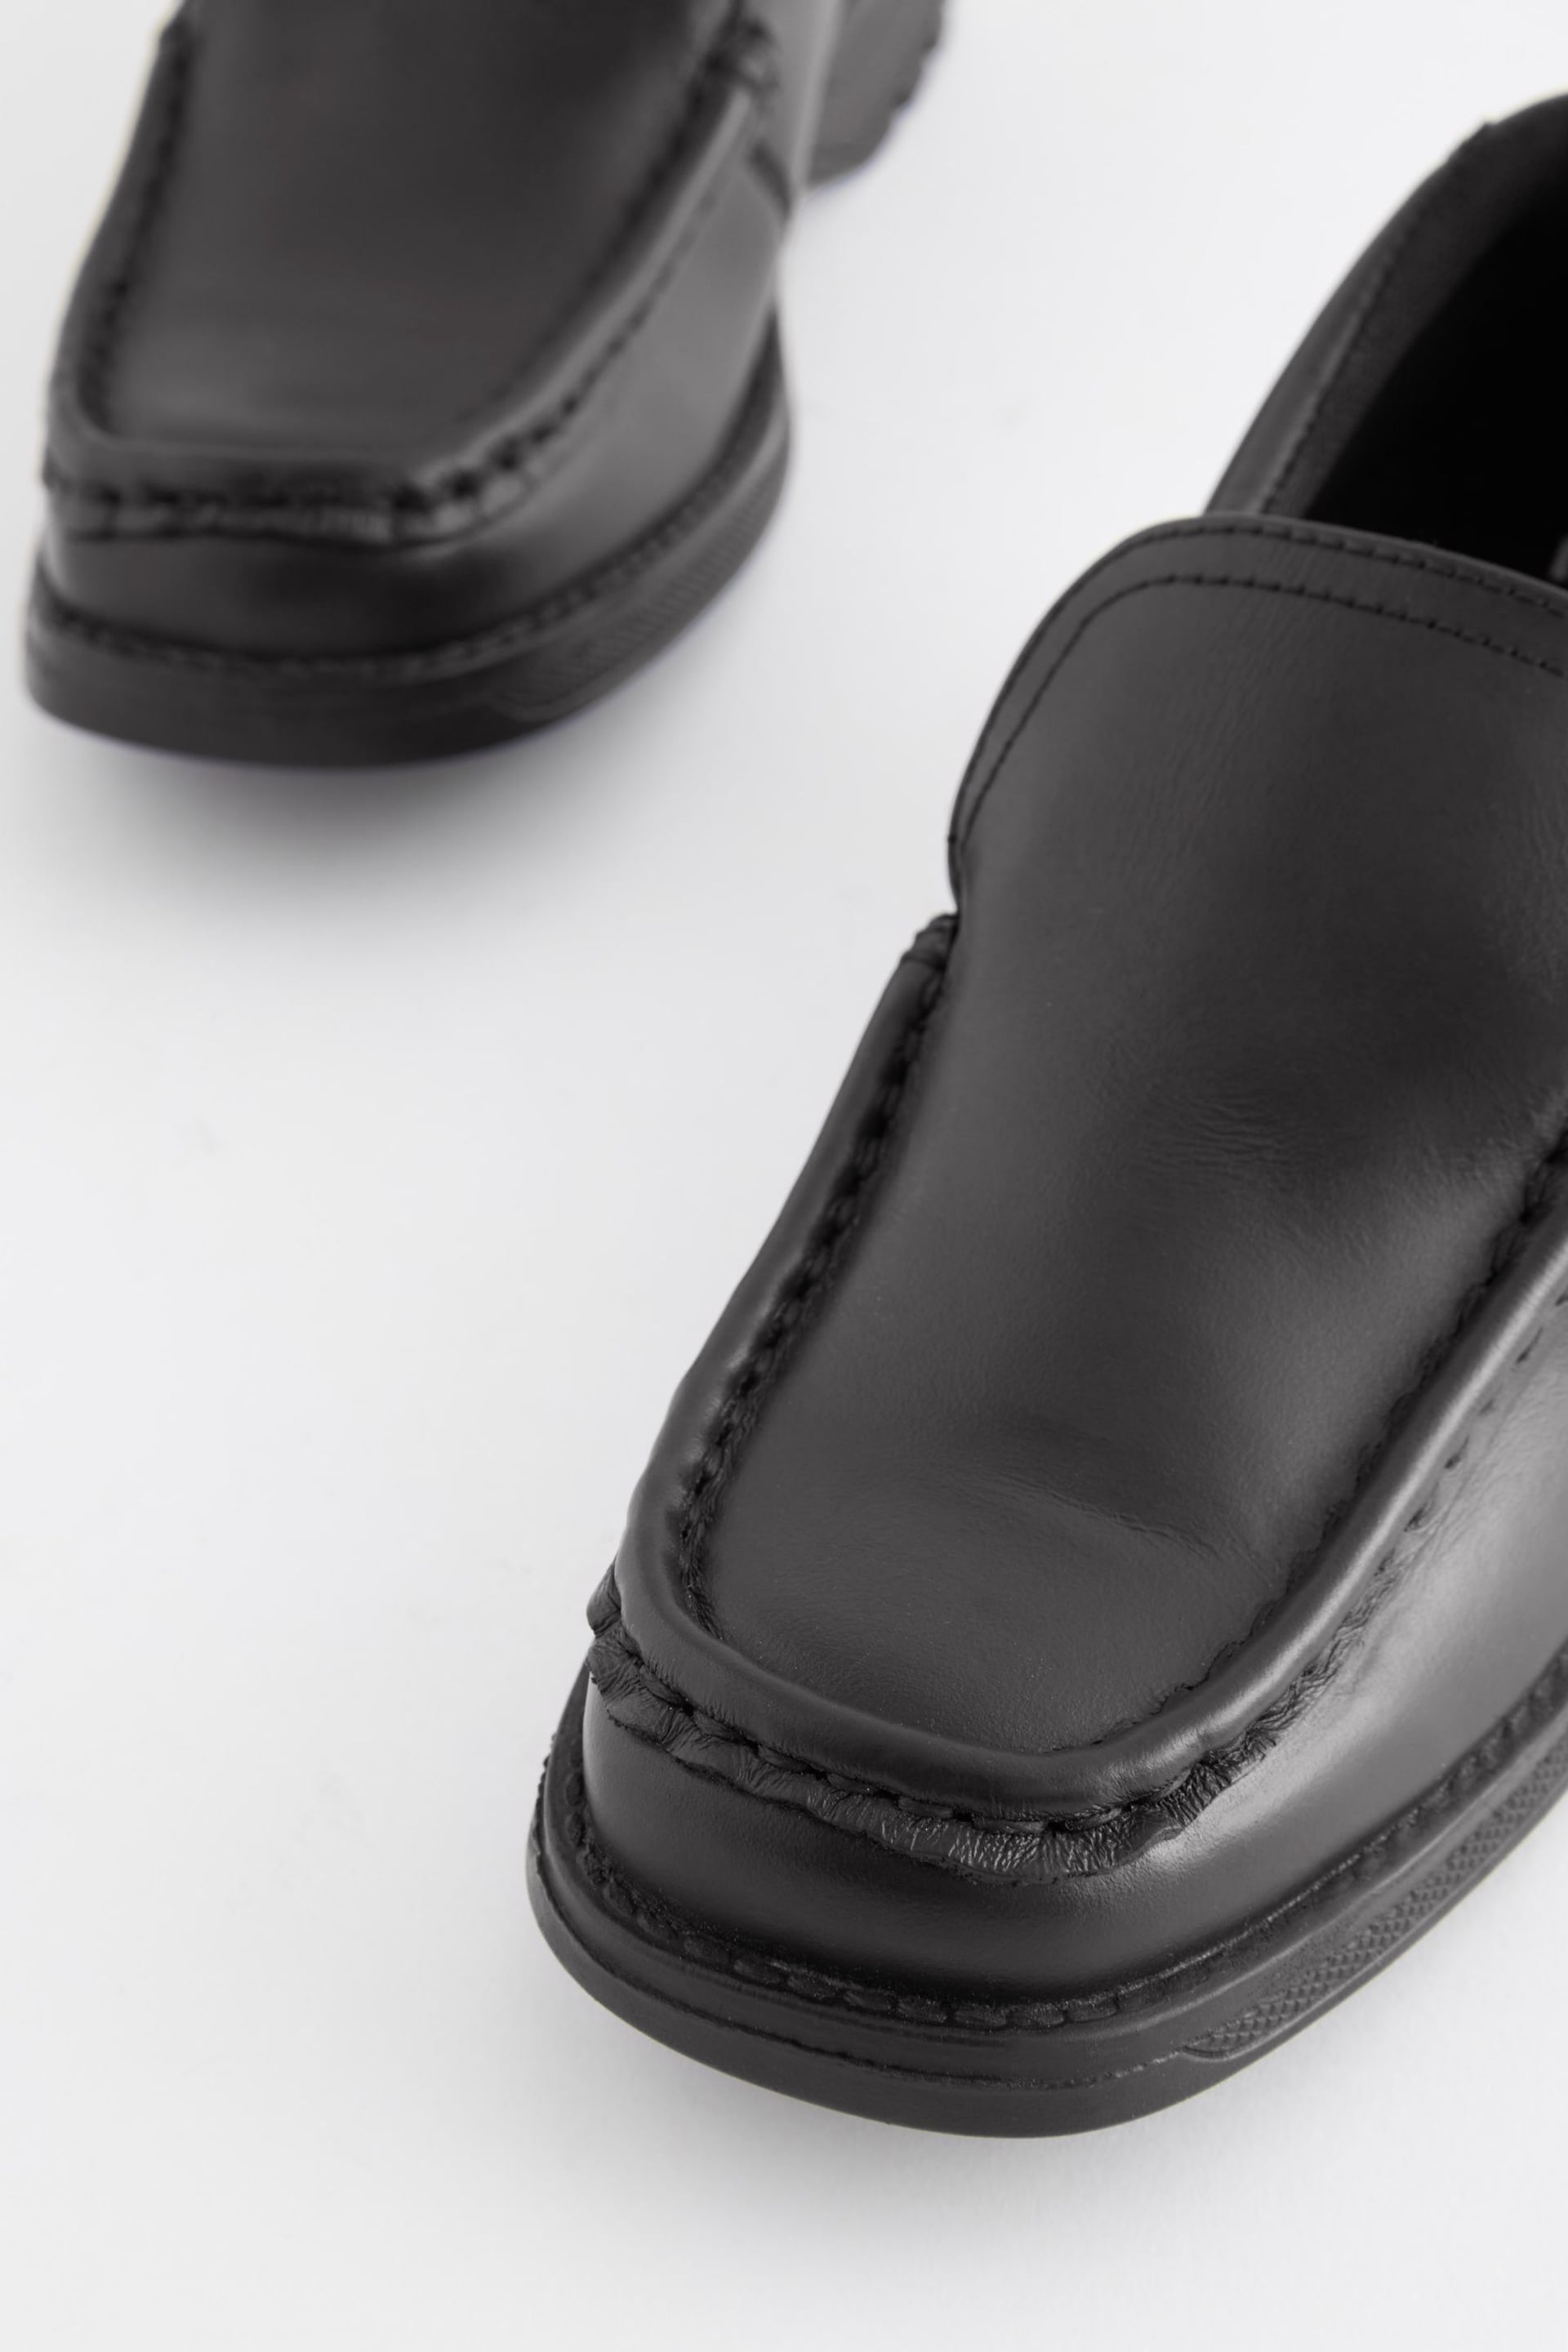 Black Standard Fit (F) School Leather Loafer Shoes - Image 3 of 7